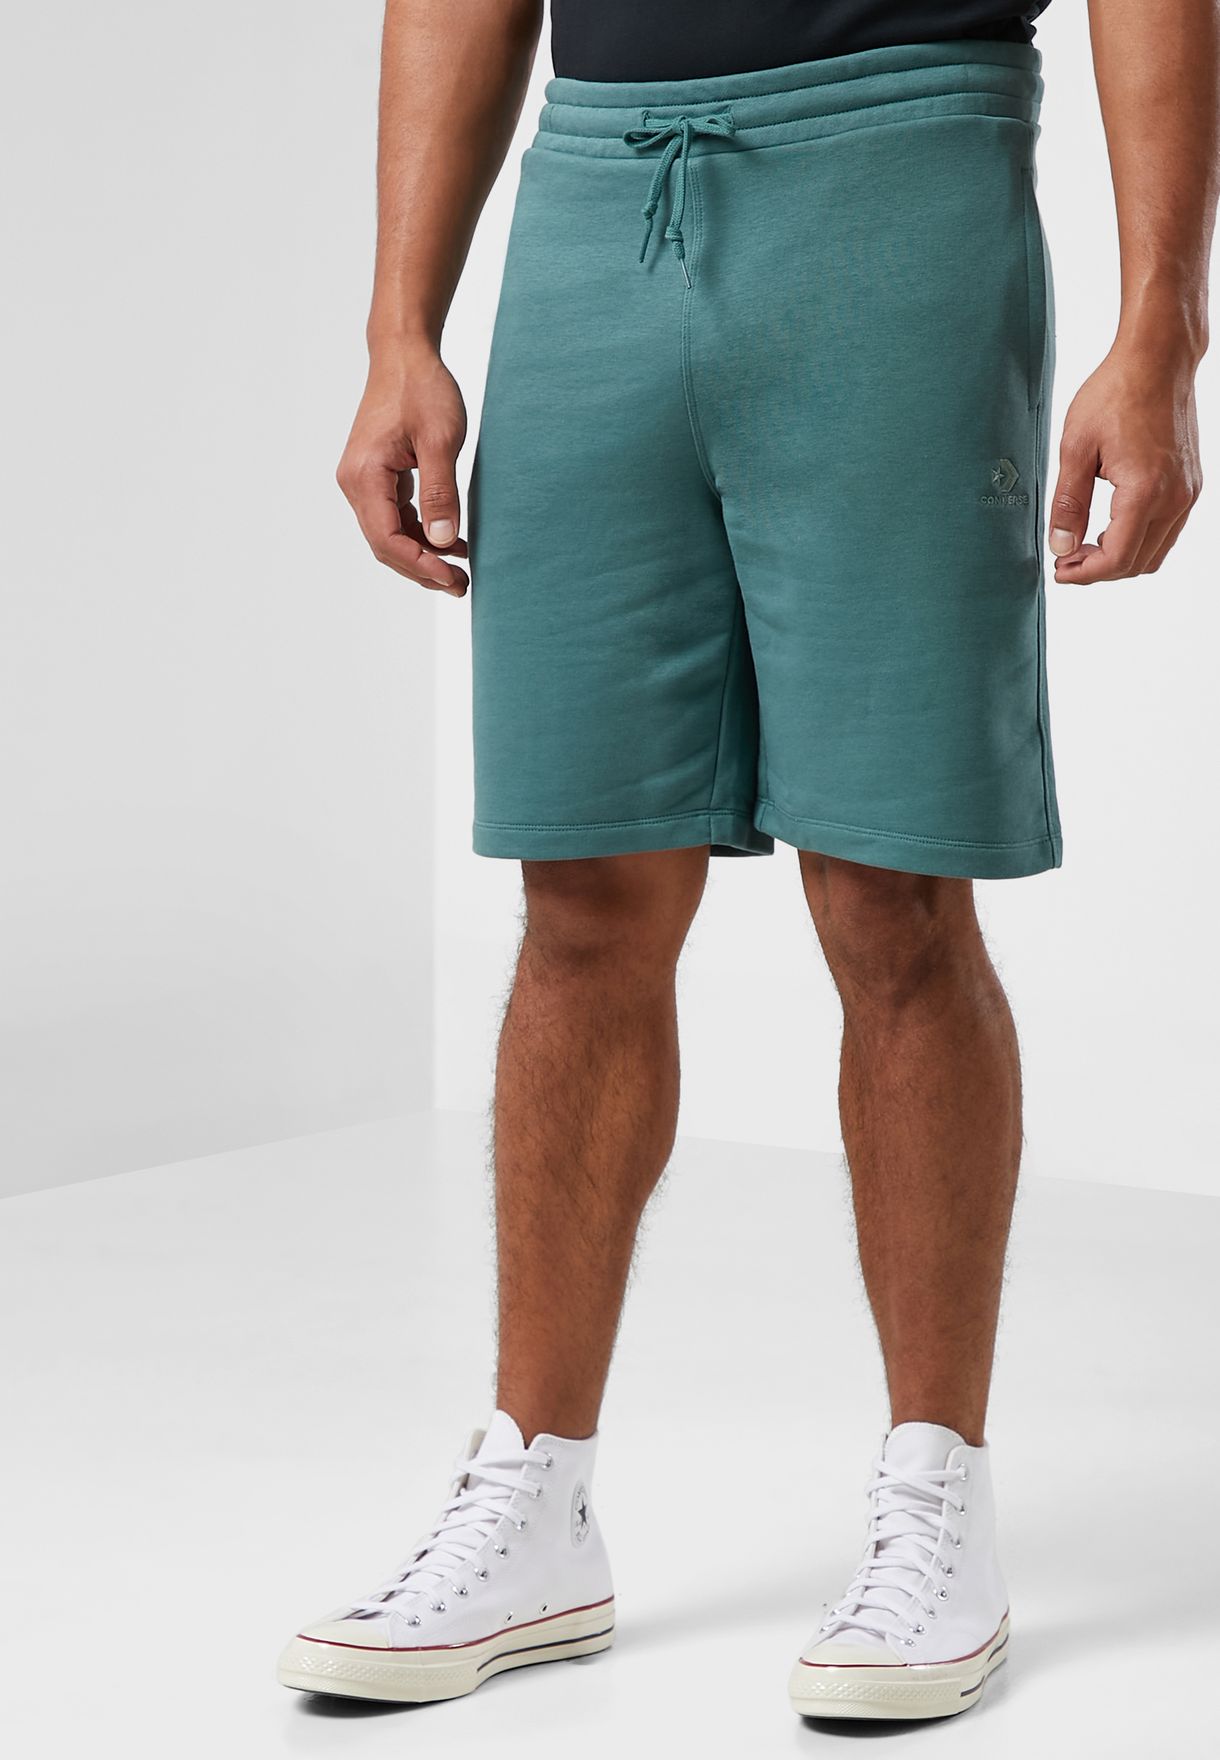 Star Chevron Shorts